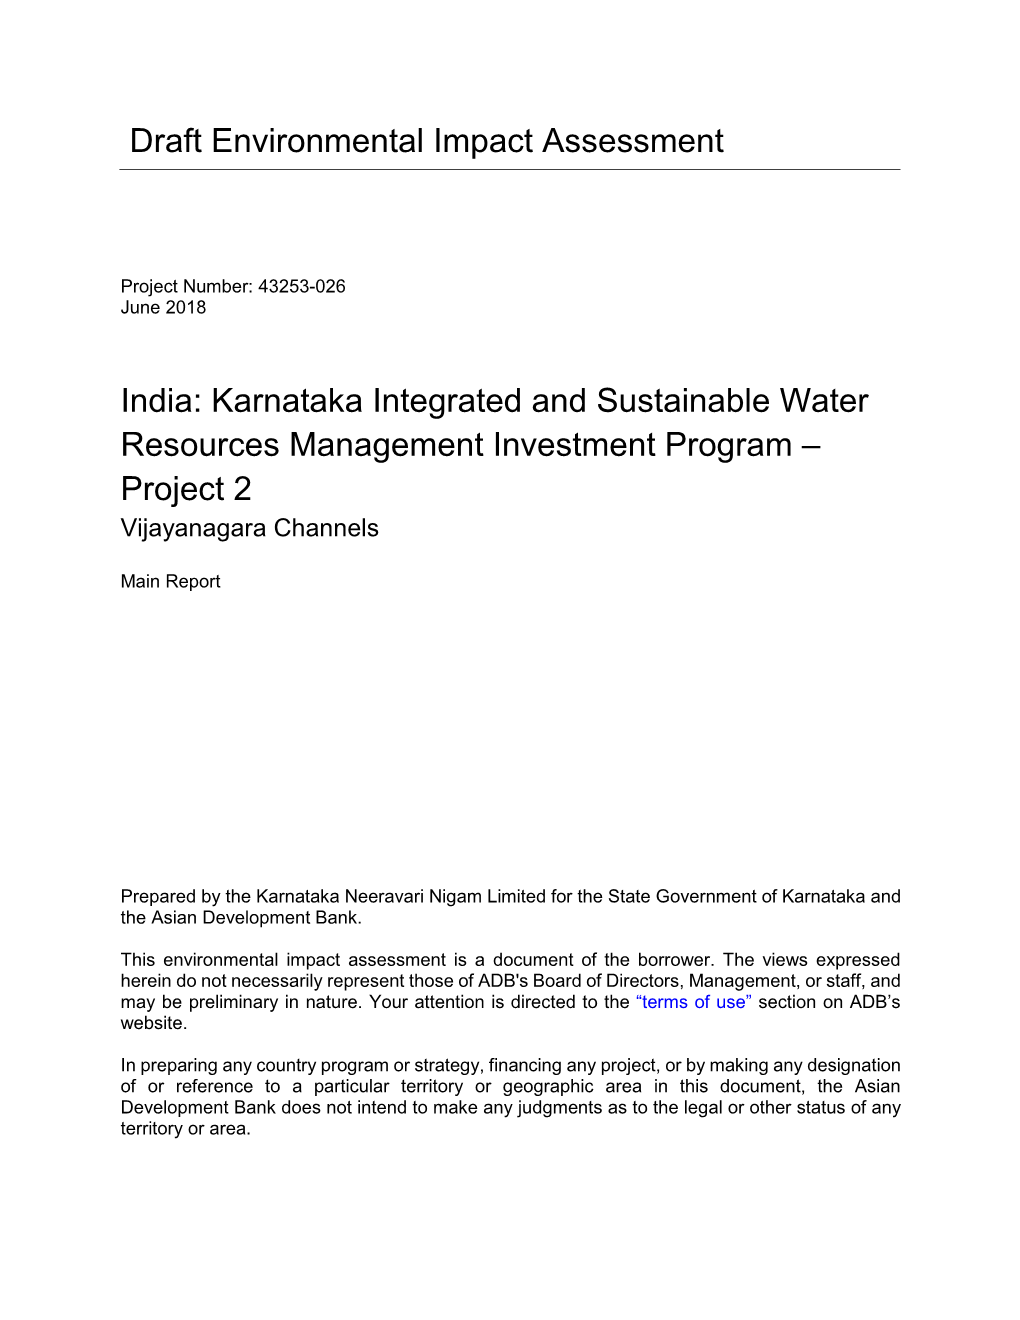 Draft Environmental Impact Assessment India: Karnataka